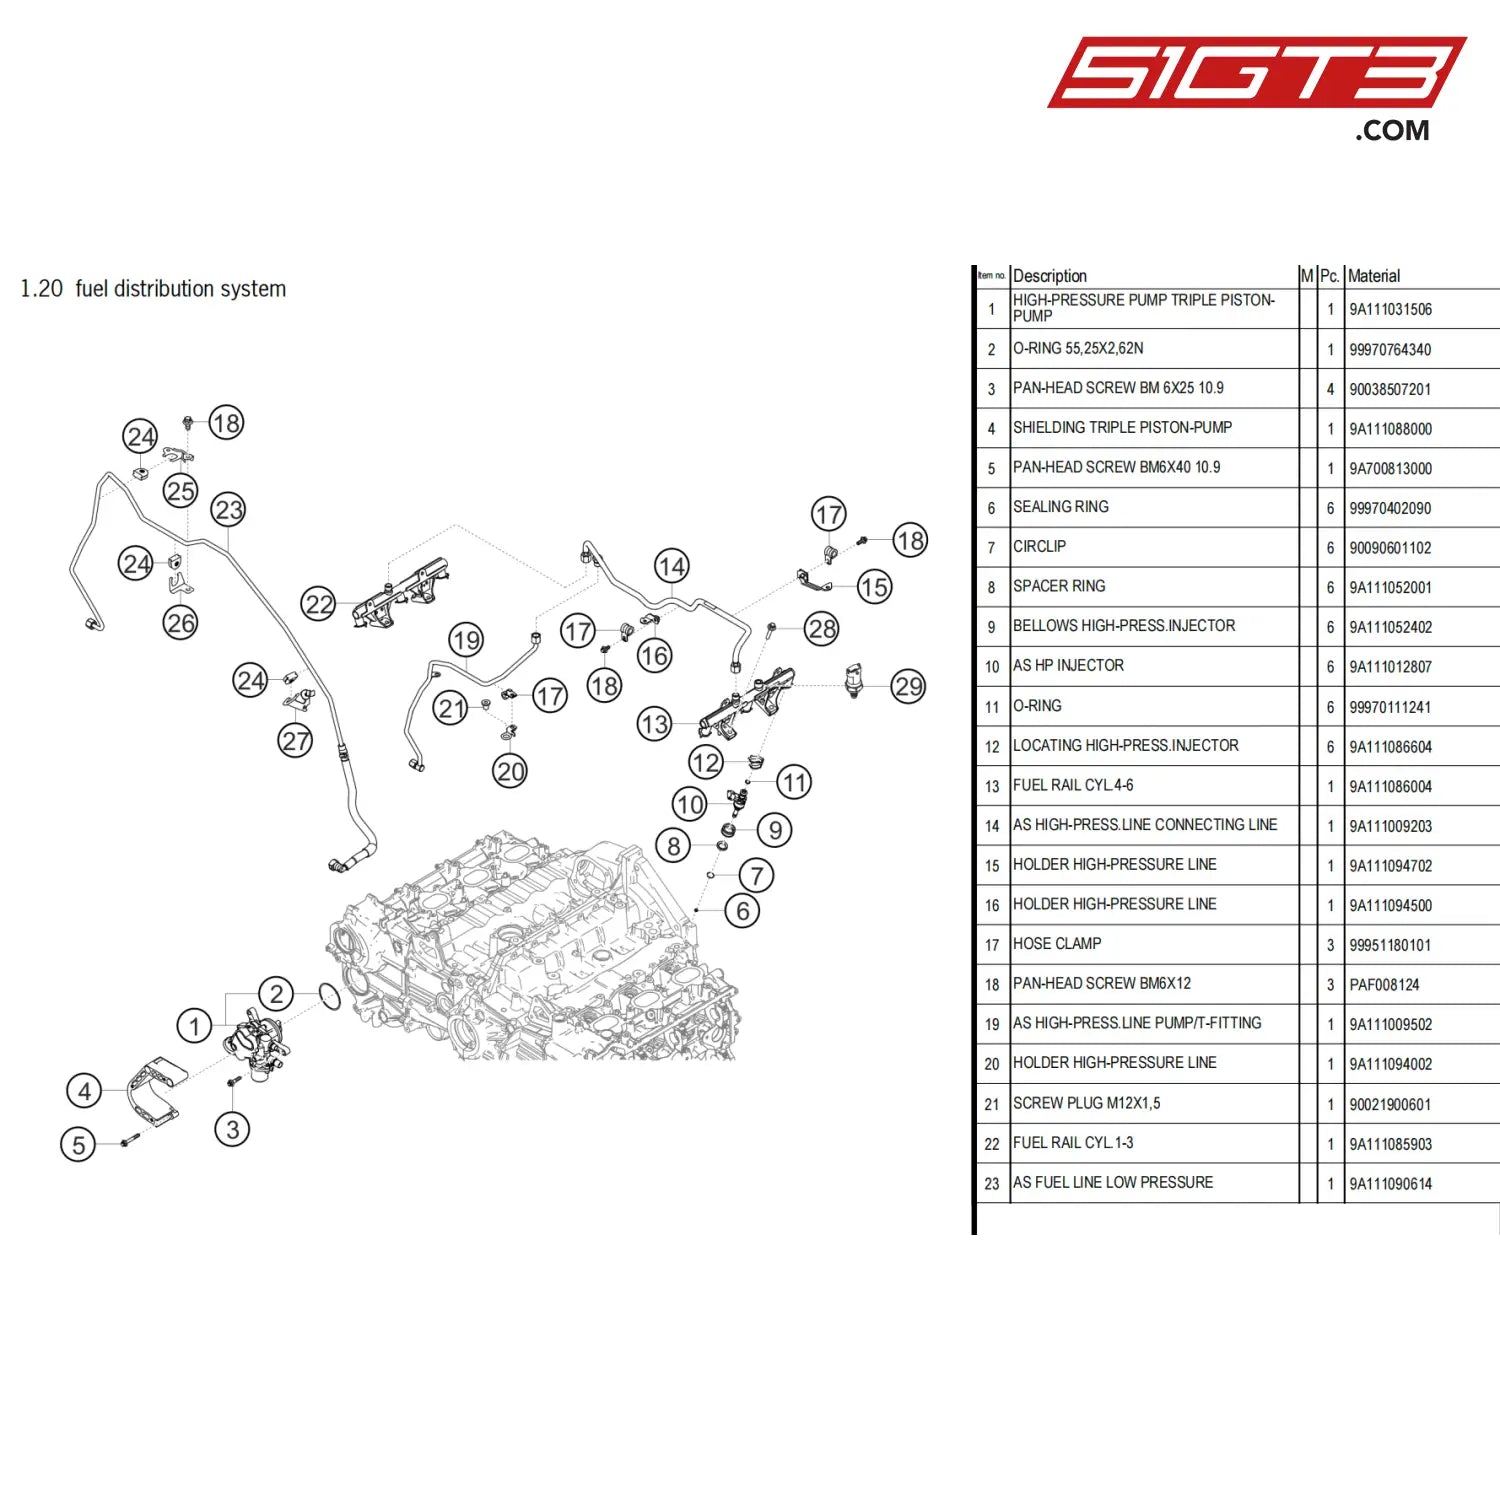 Holder Low-Pressure Line - 9A111032302 [Porsche 718 Cayman Gt4 Clubsport] Fuel Distribution System